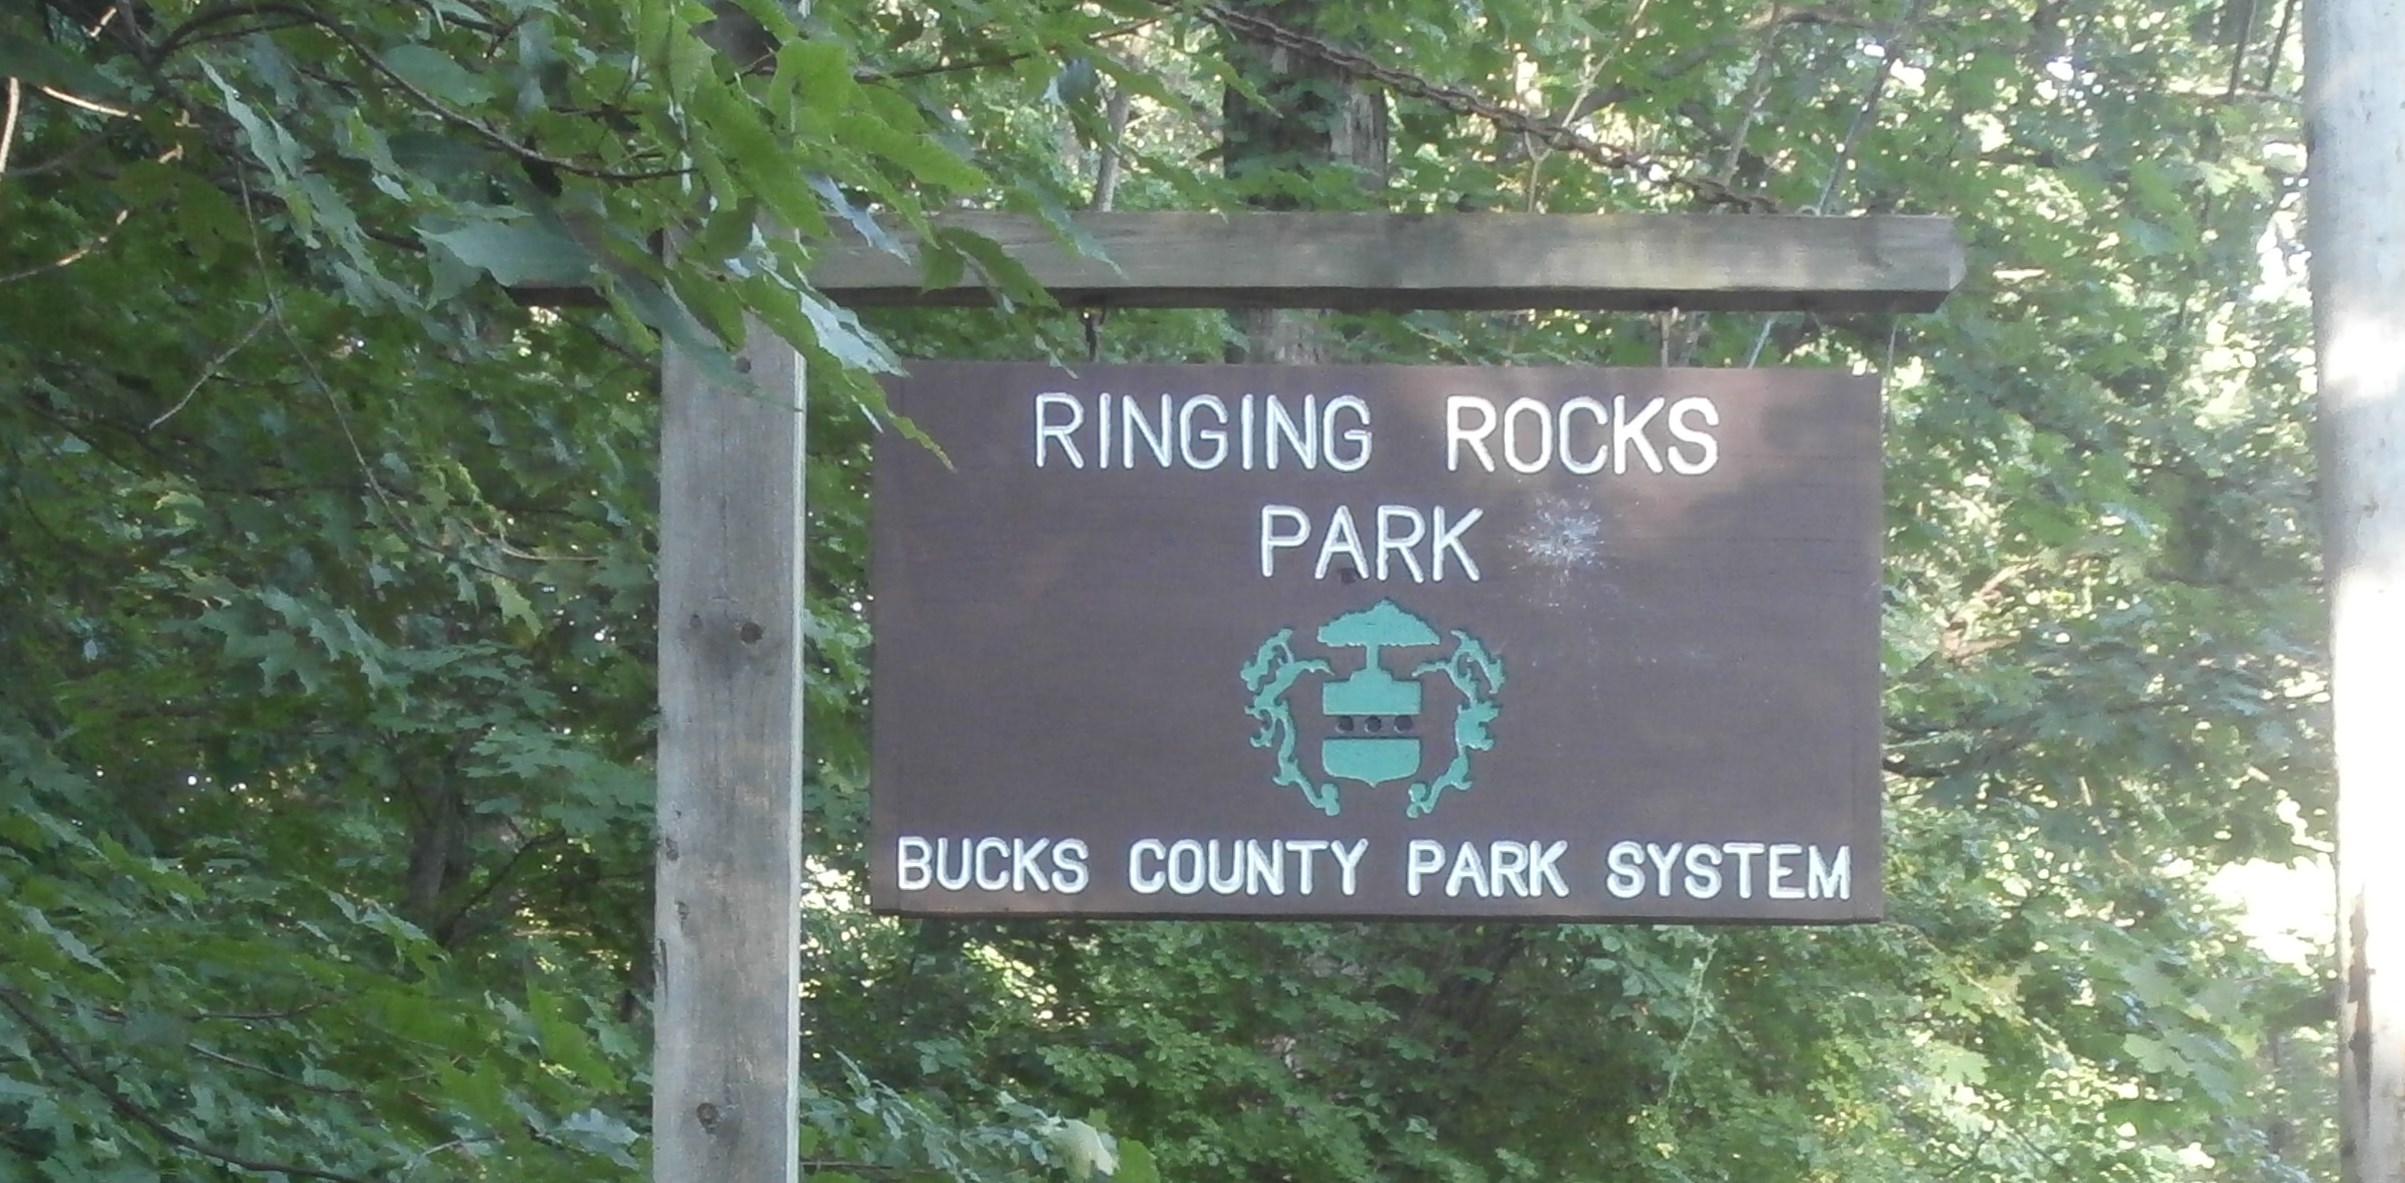 Ringing Rocks Park in Pennsylvania